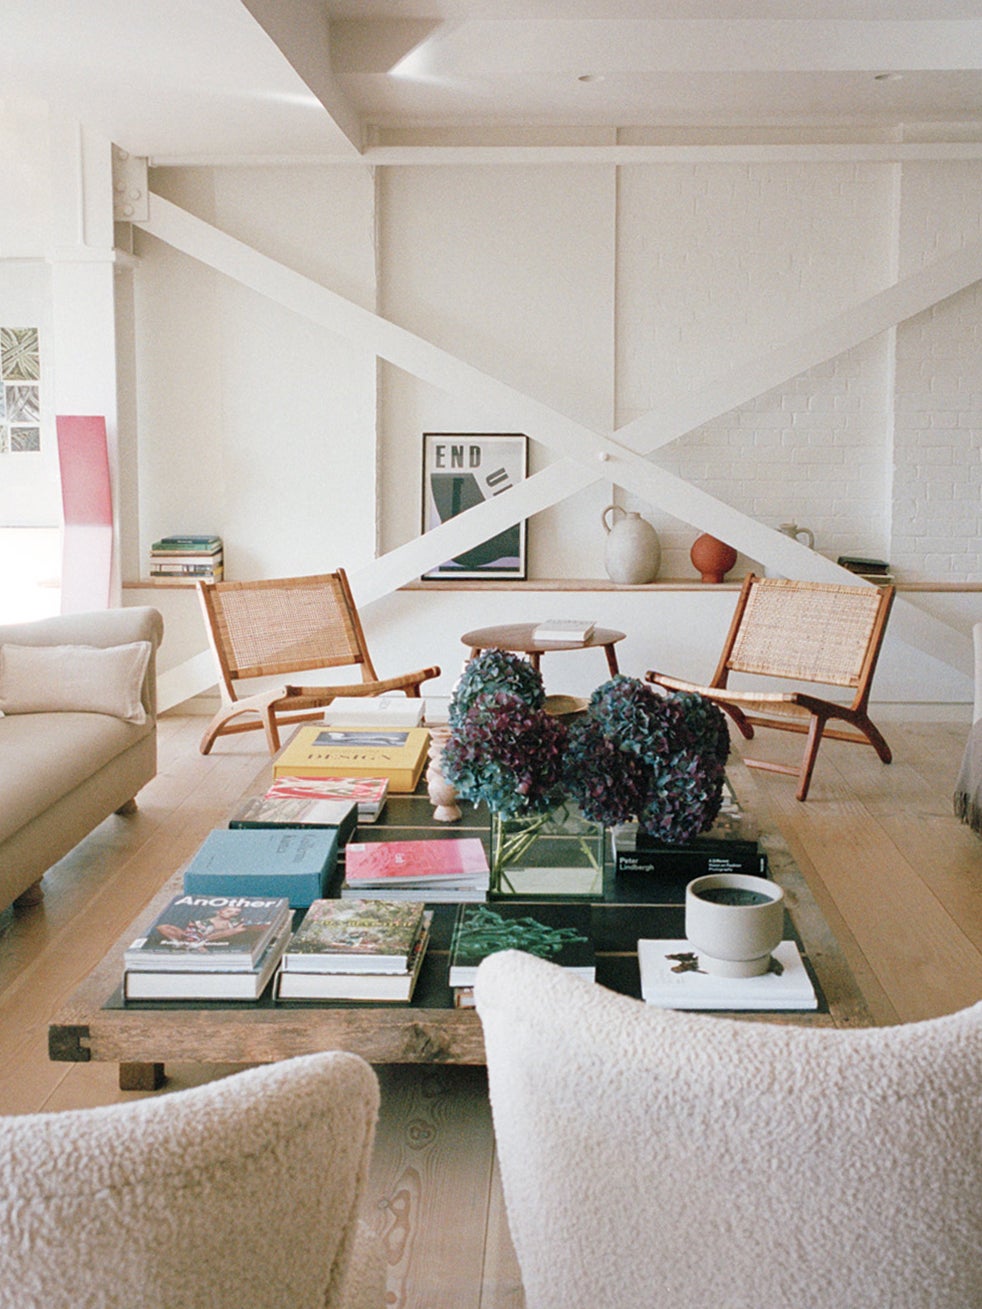 Alex-eagle-living-room-books-table